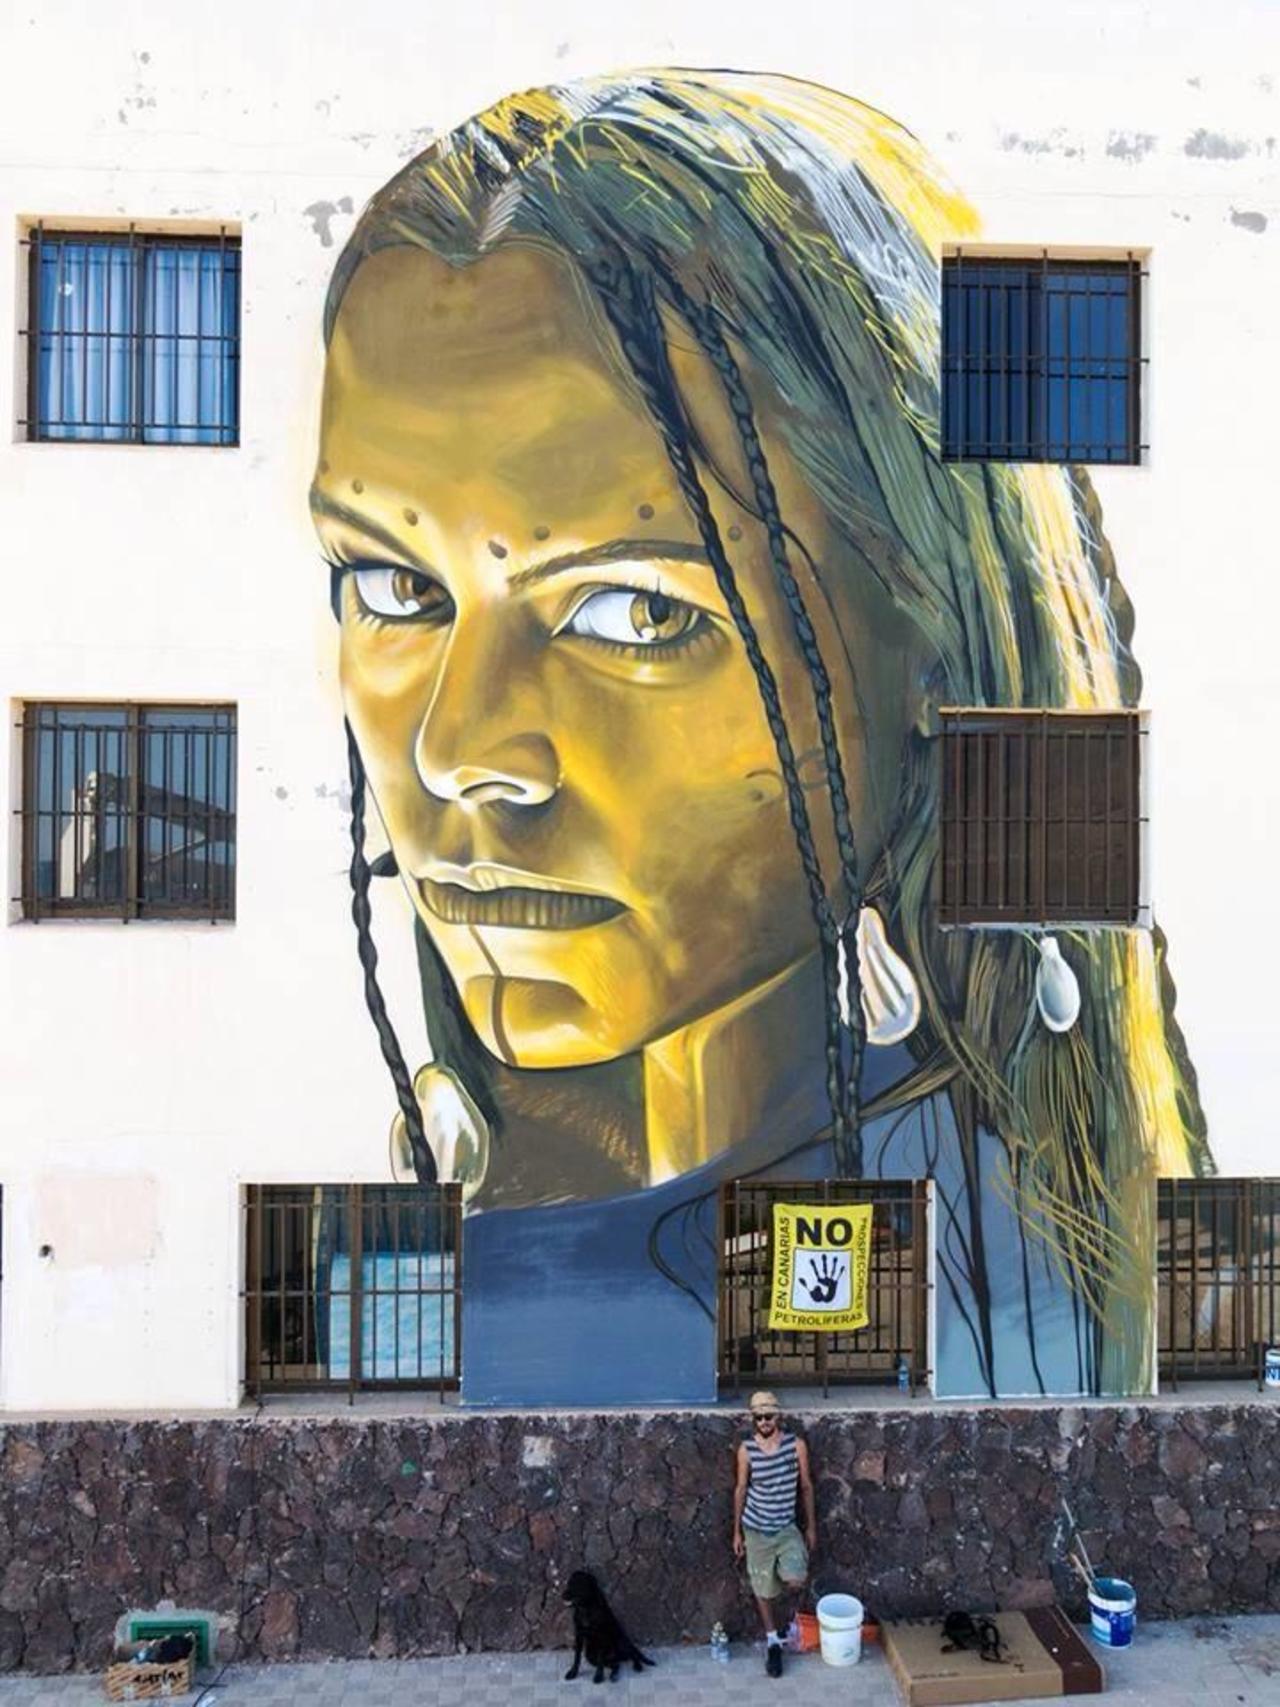 RT @GoogleStreetArt: Sabotaje Al Montaje @sabotajeal new Street Art portrait in Fuerteventura 

#art #mural #graffiti #streetart http://t.co/kKubfDzgWs